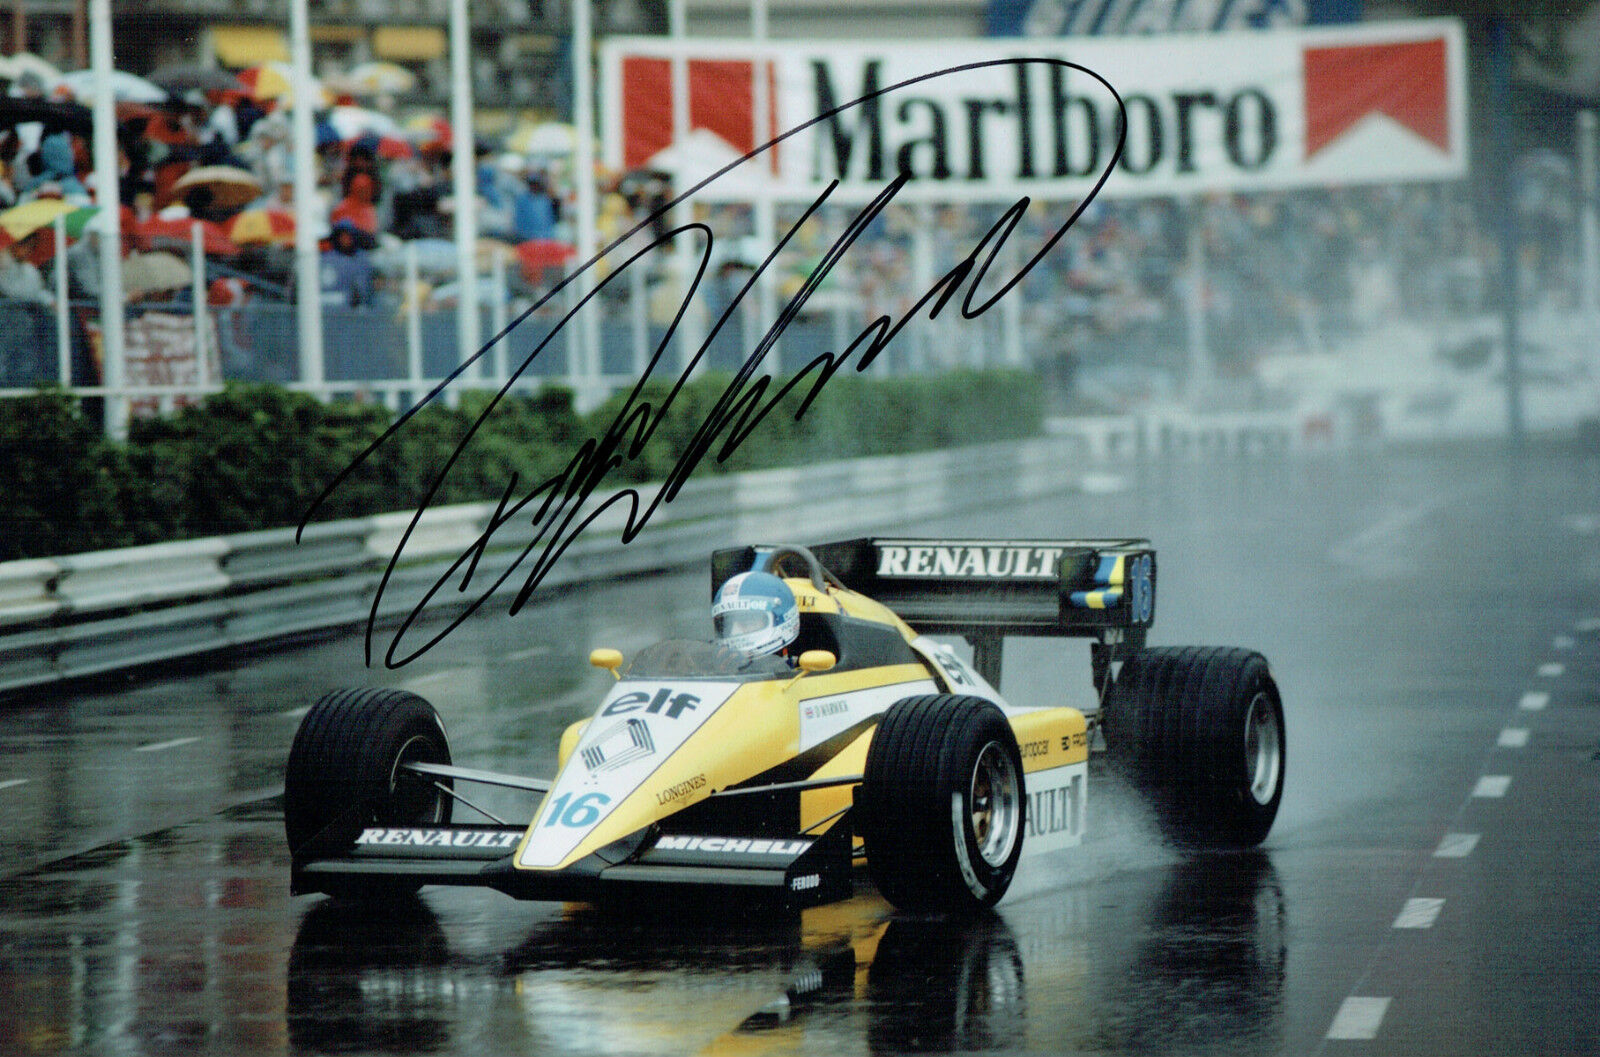 Derek WARWICK Autograph SIGNED 12x8 Photo Poster painting Grand Prix Renault Car AFTAL COA